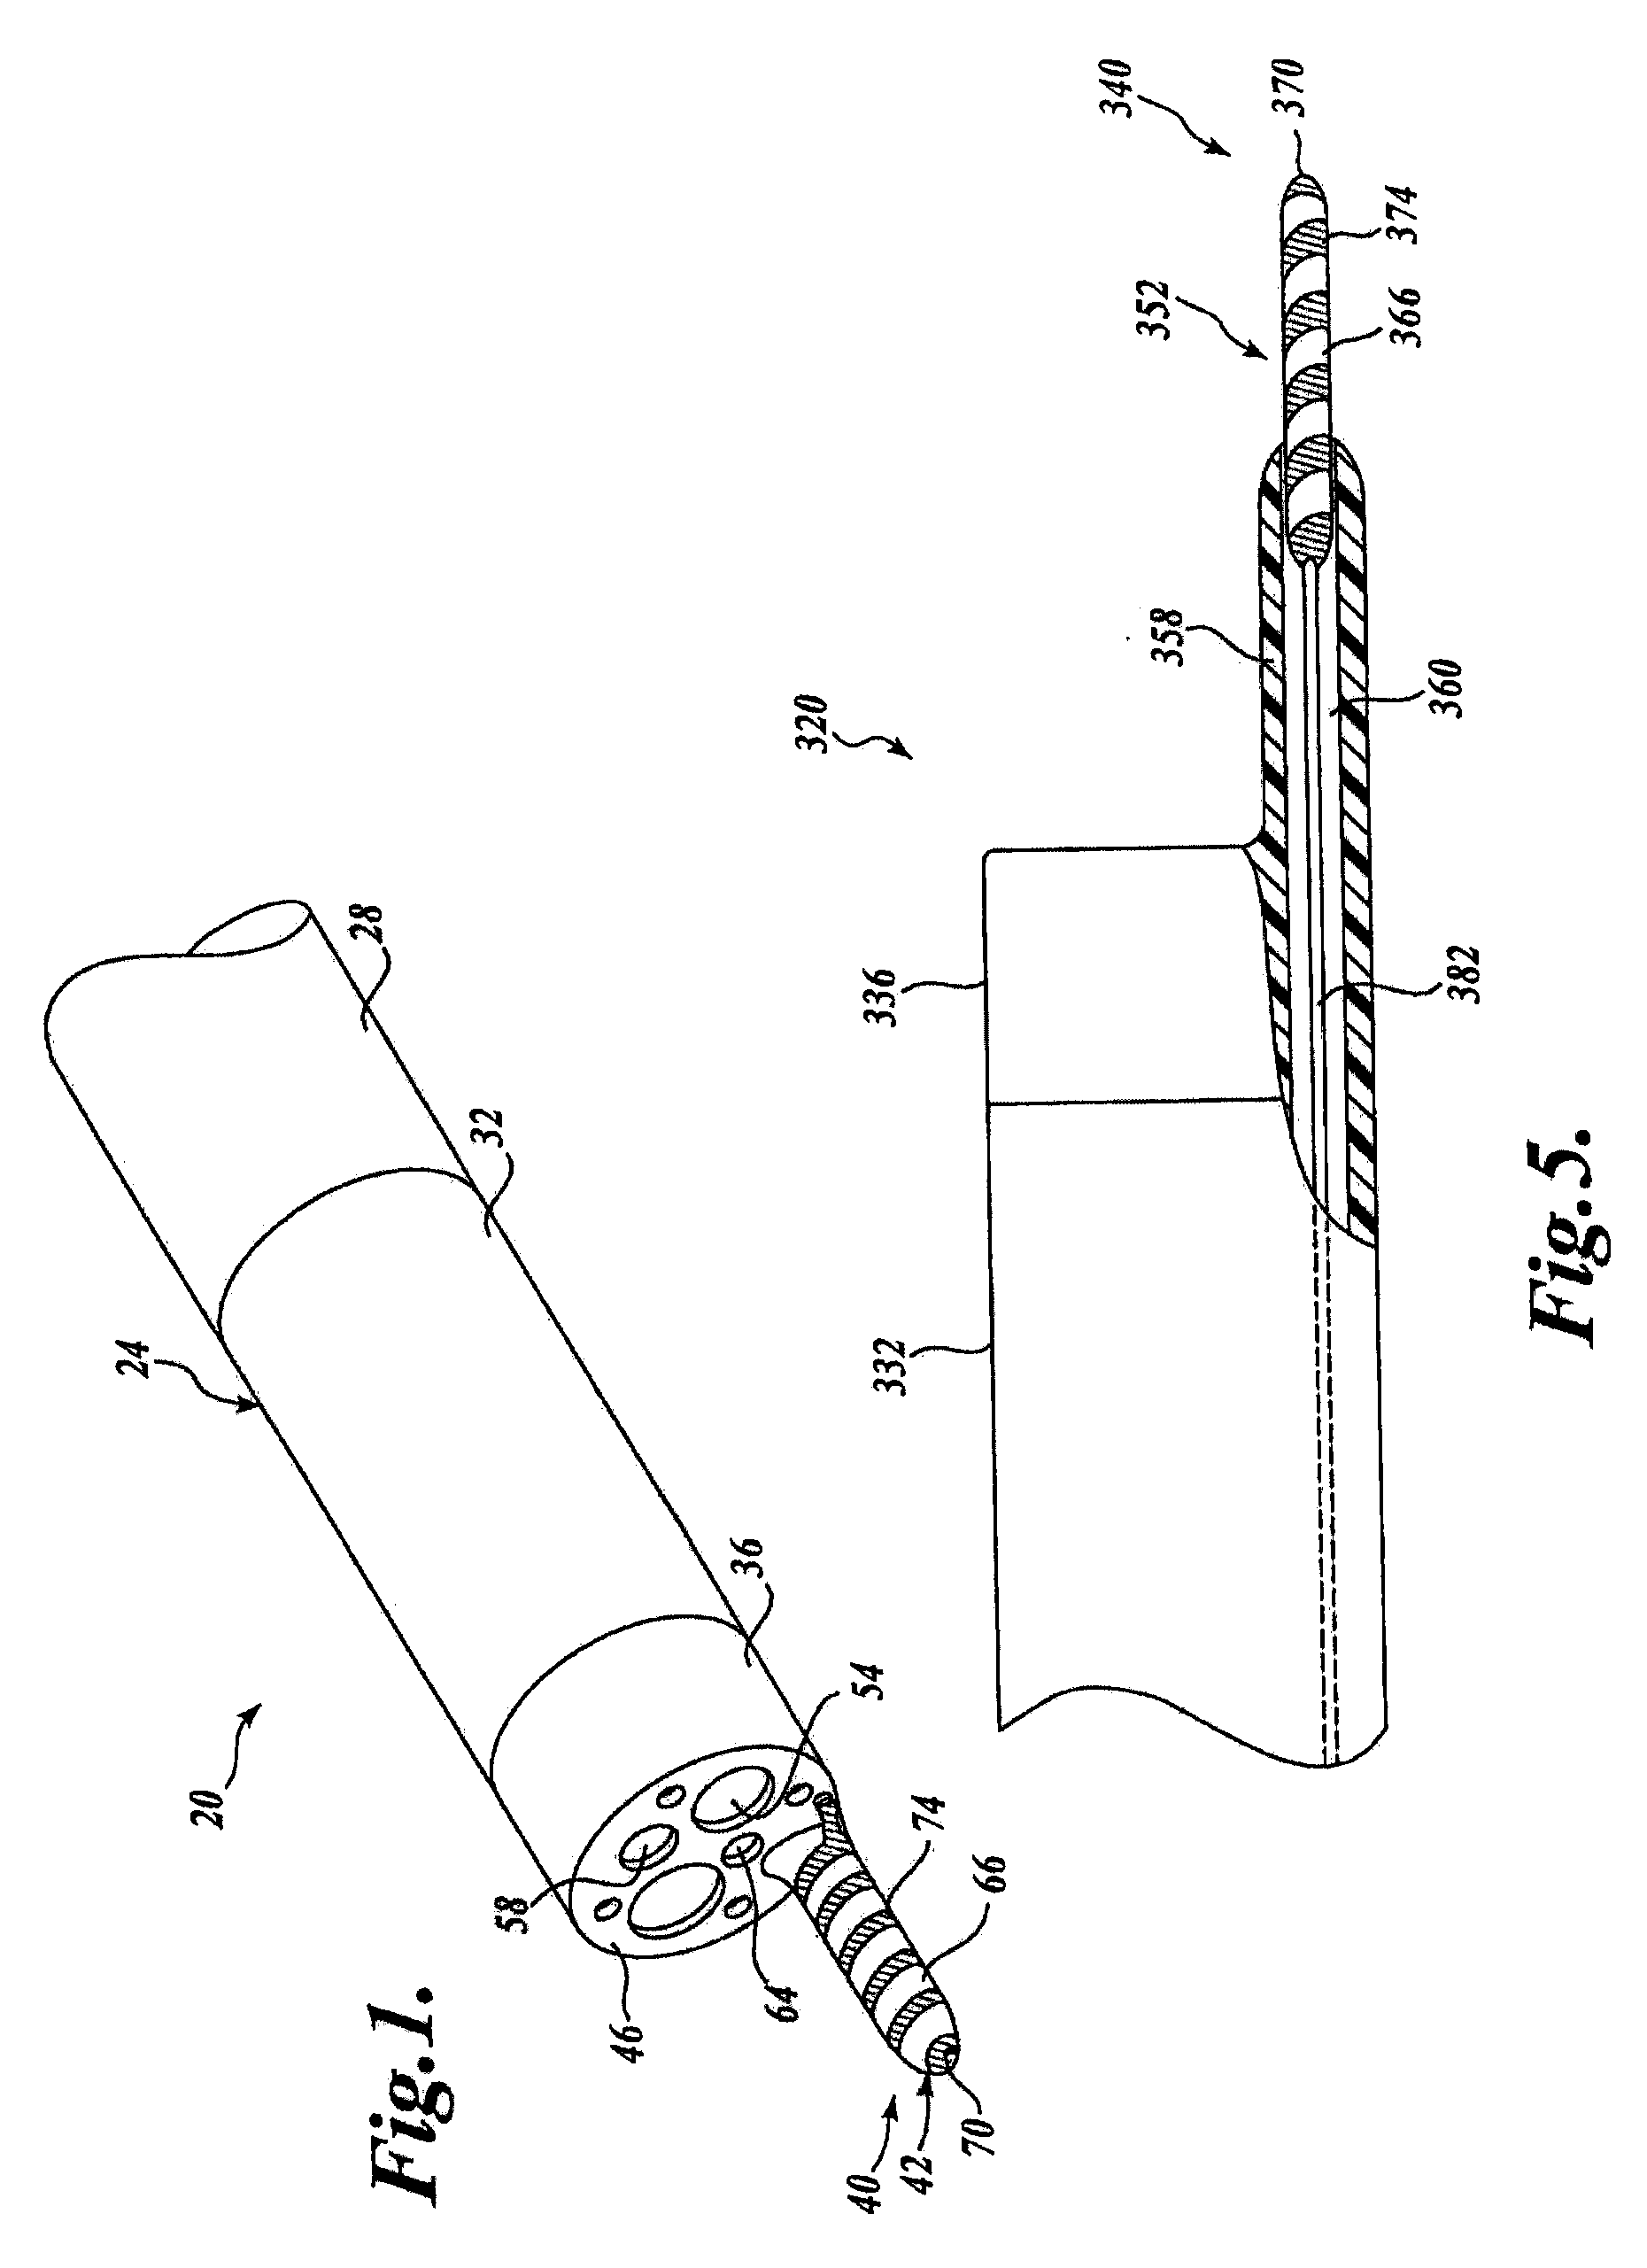 Endoscopic apparatus with integrated hemostasis device